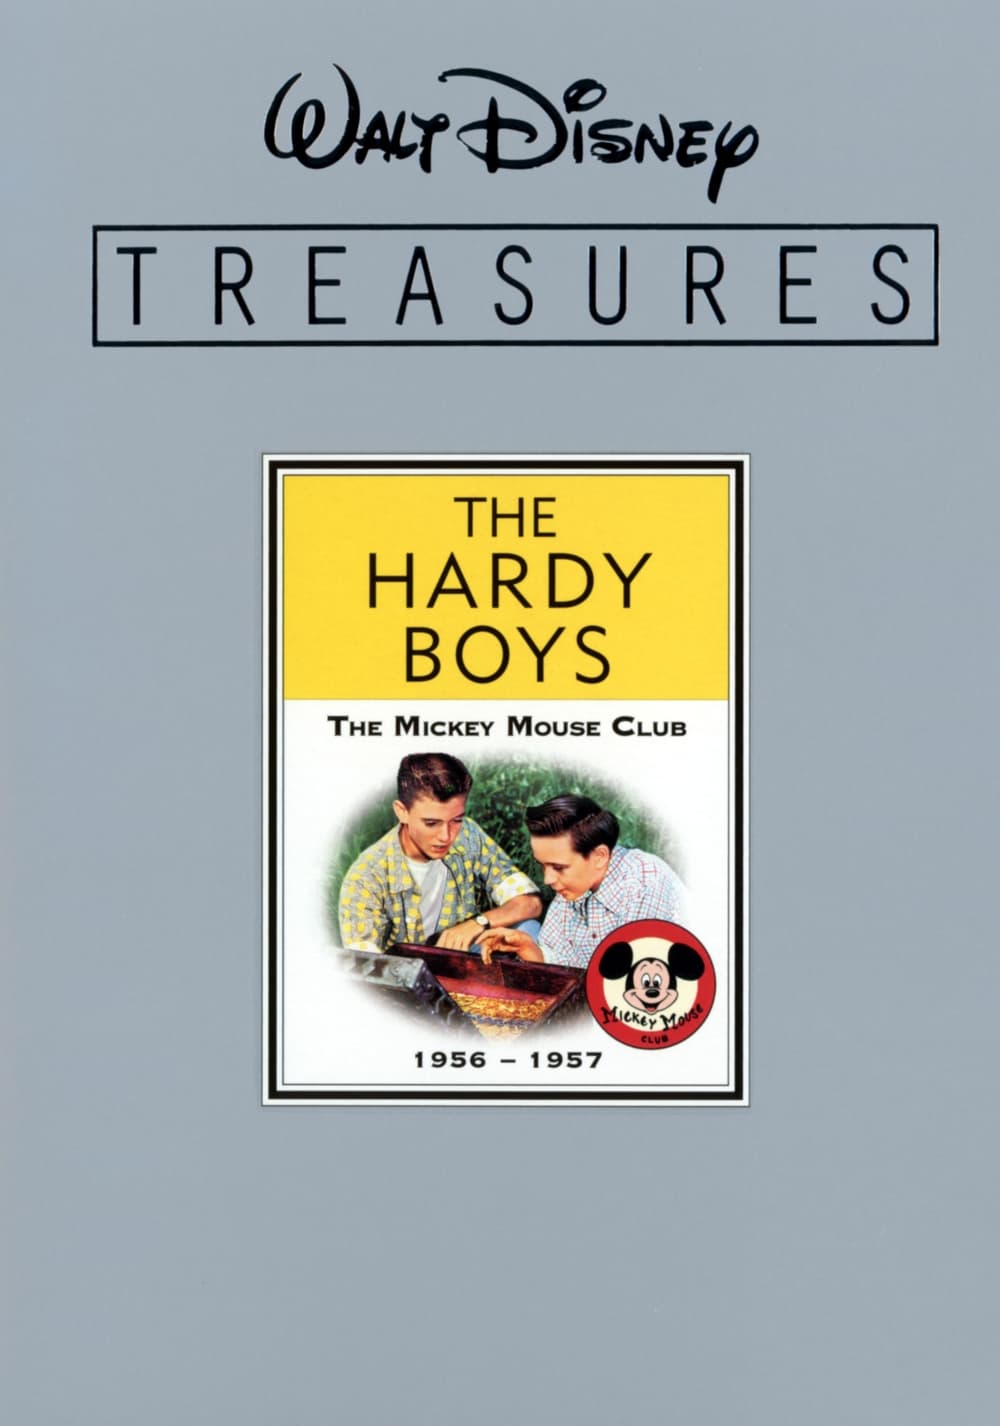 Walt Disney Treasures - The Hardy Boys